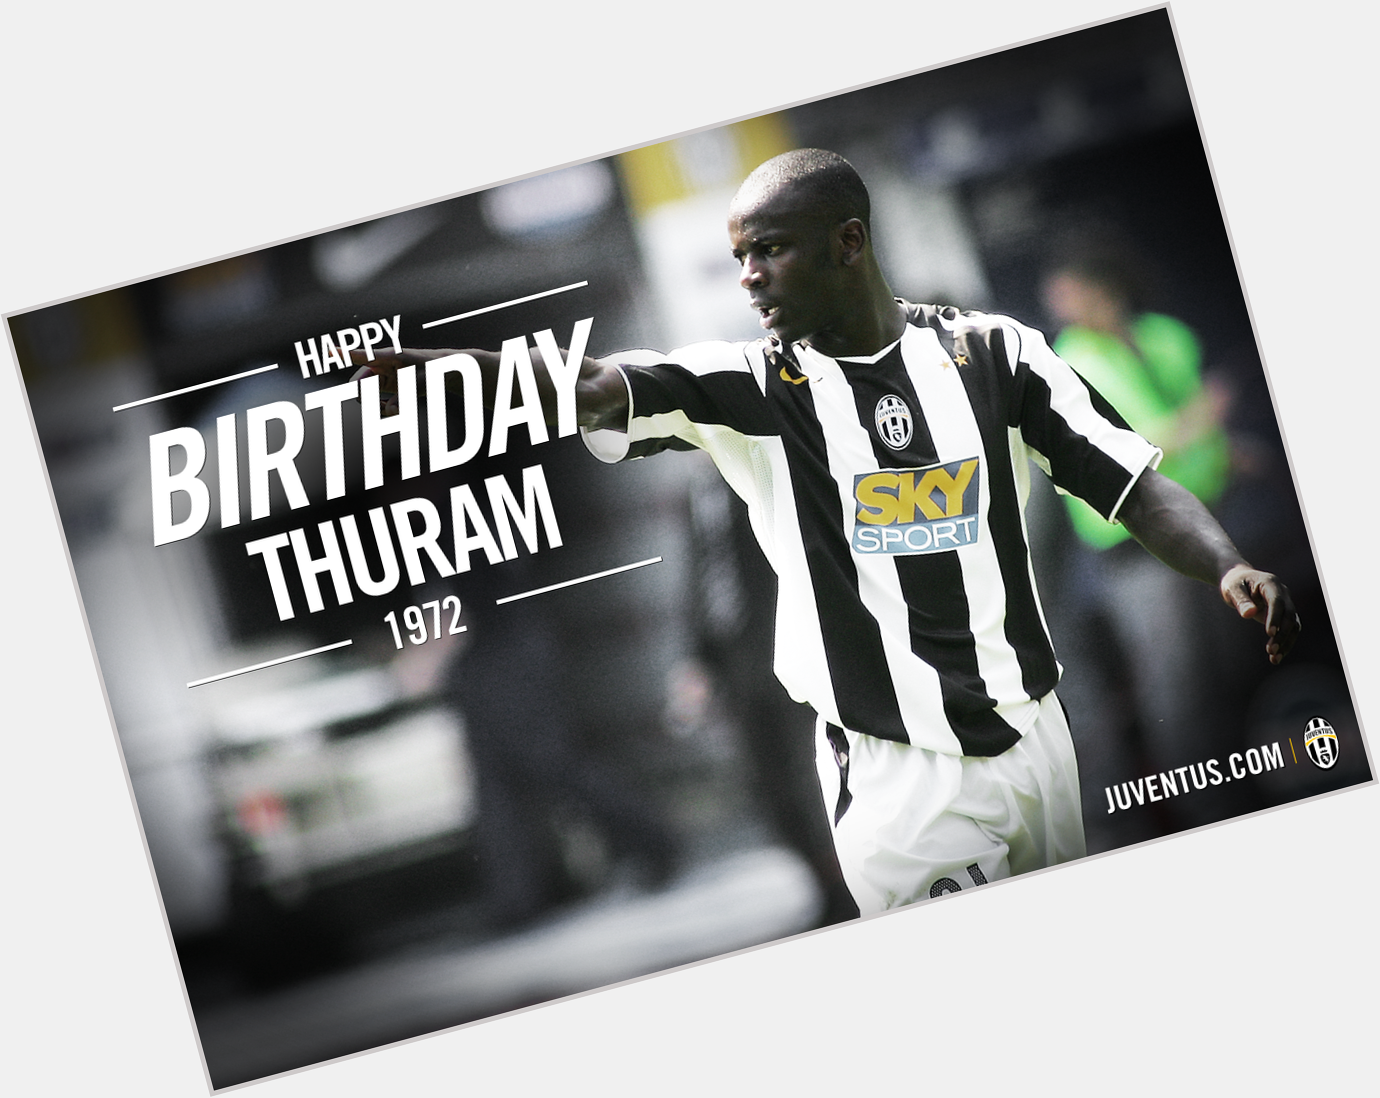 Happy birthday, Lilian Thuram former juventus defender turns 43 today. Many happy returns  